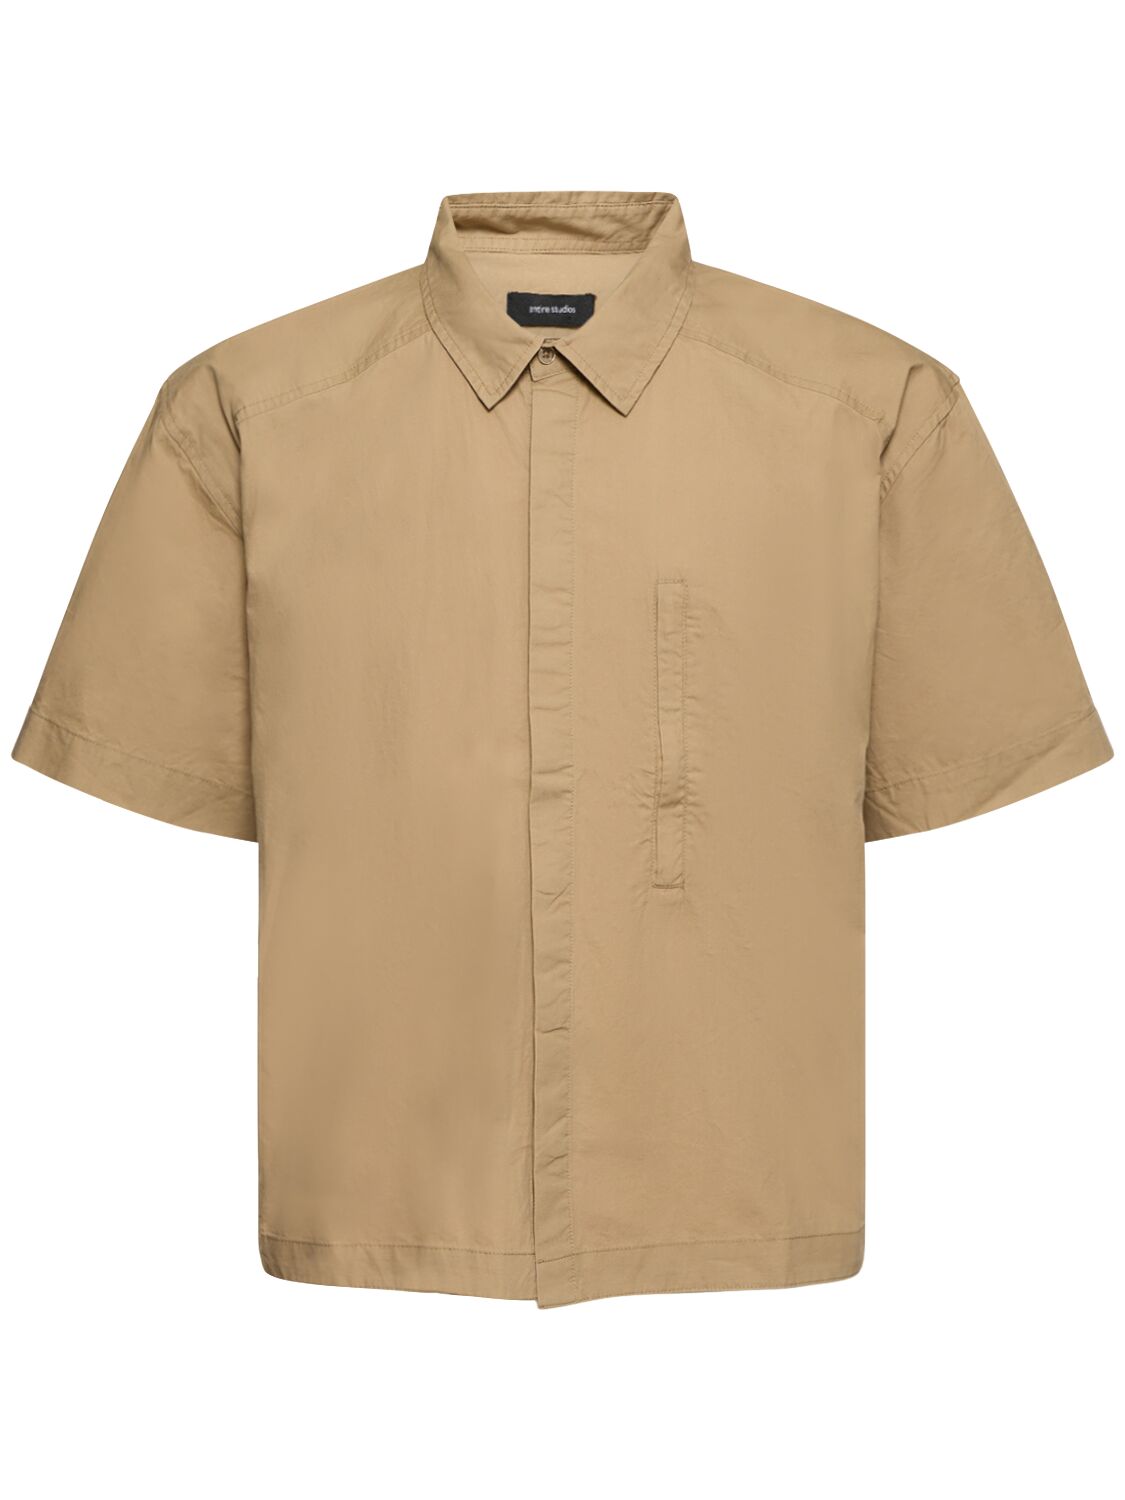 Image of Short Sleeve Cotton Shirt